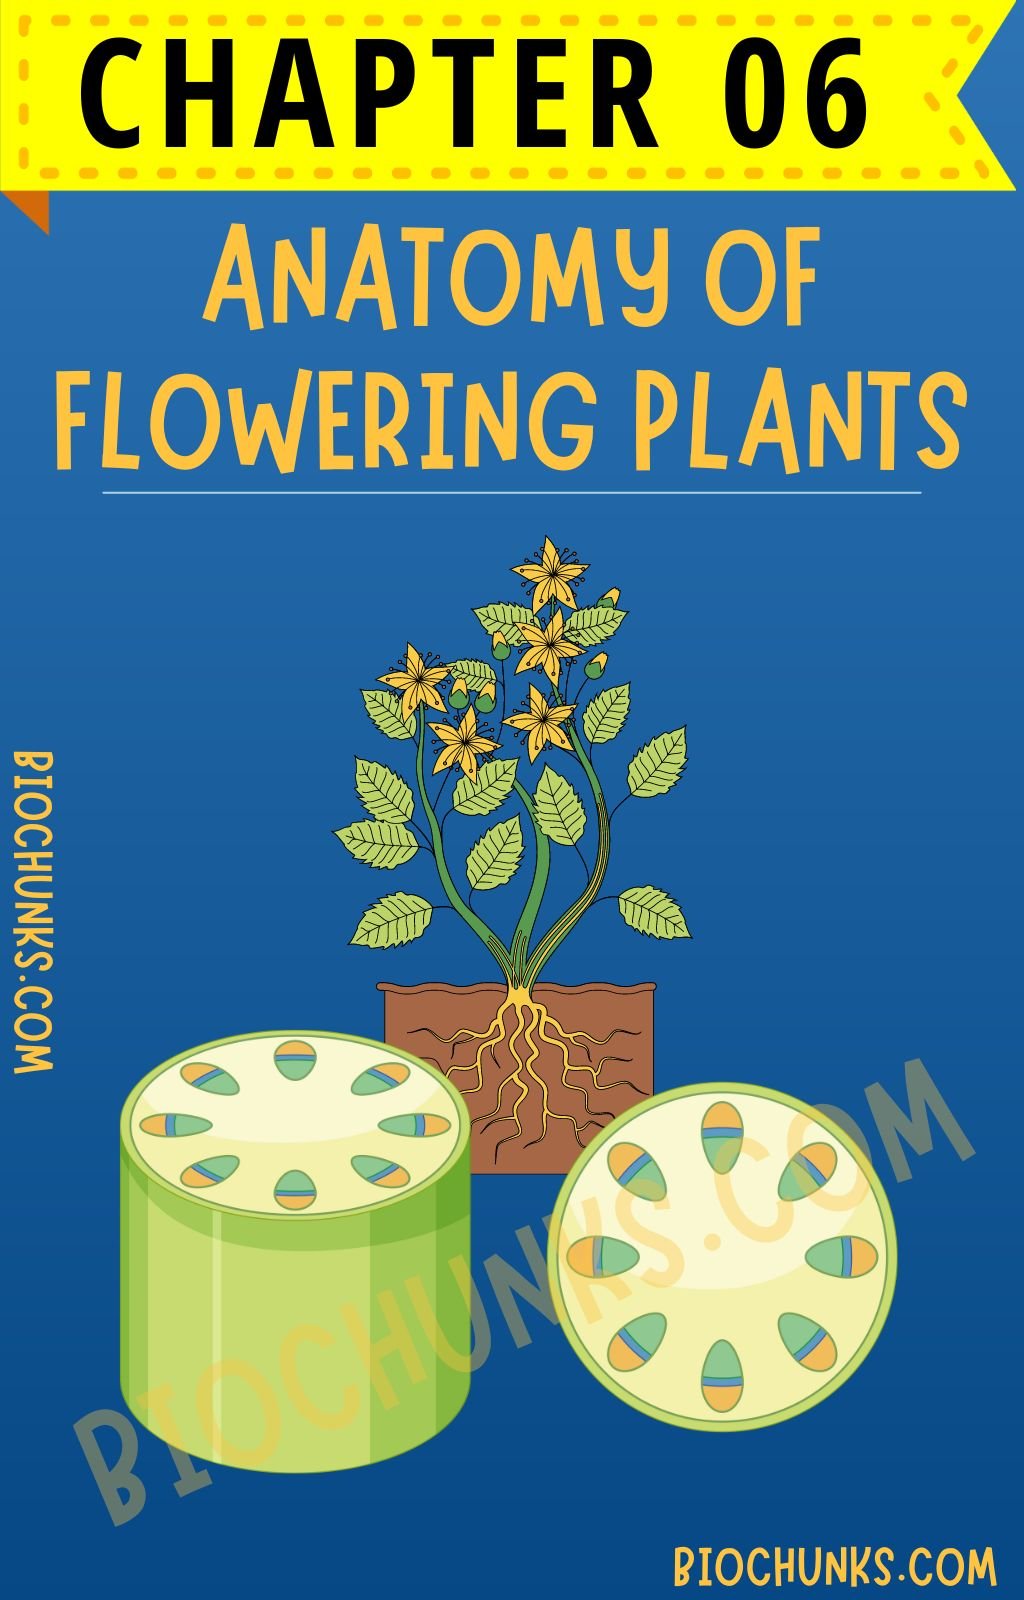 Anatomy of Flowering Plants Chapter 06 Class 11th biochunks.com